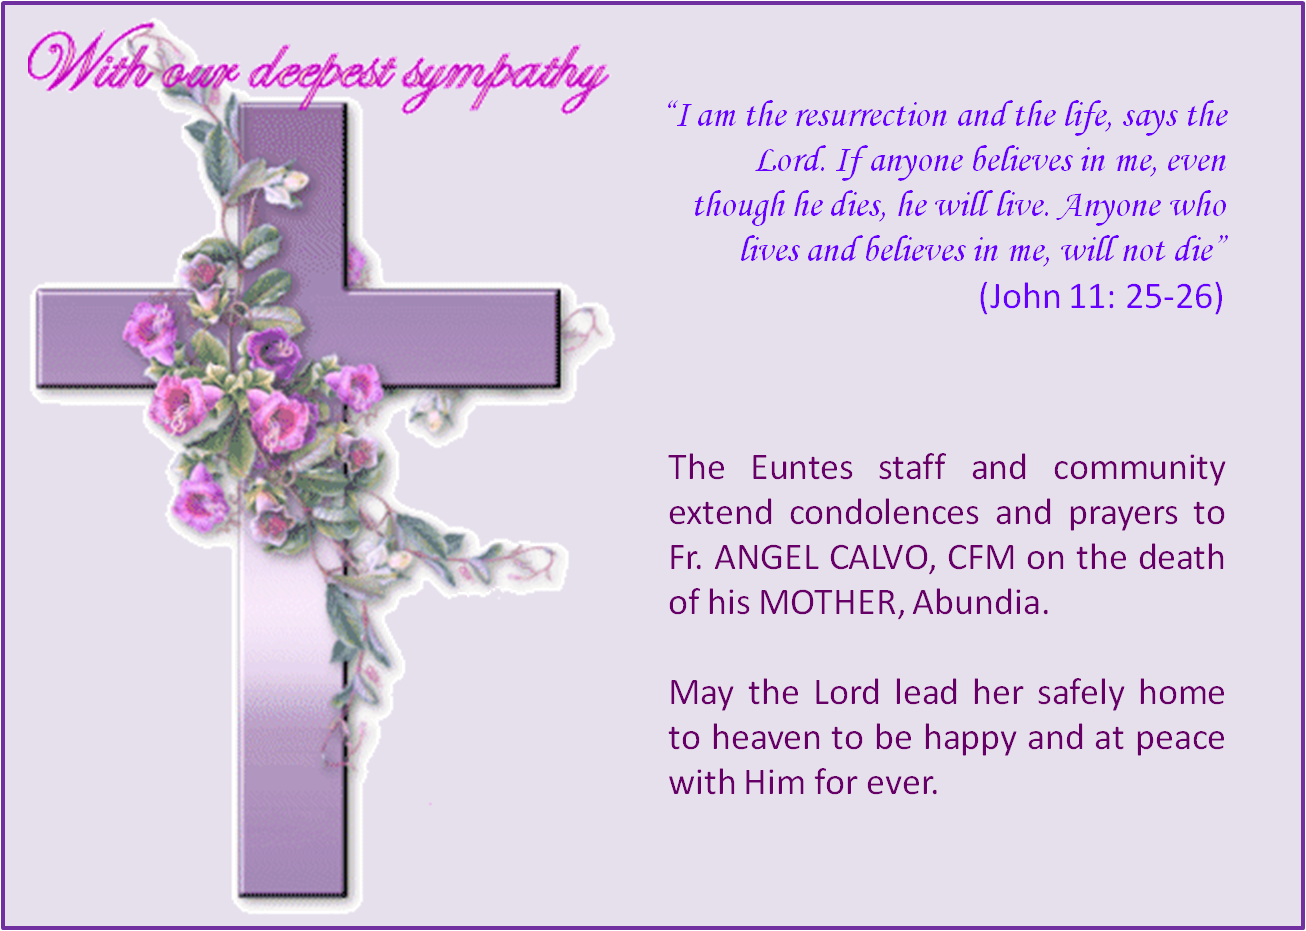 Condolences and Prayers to Fr. Angel Calvo